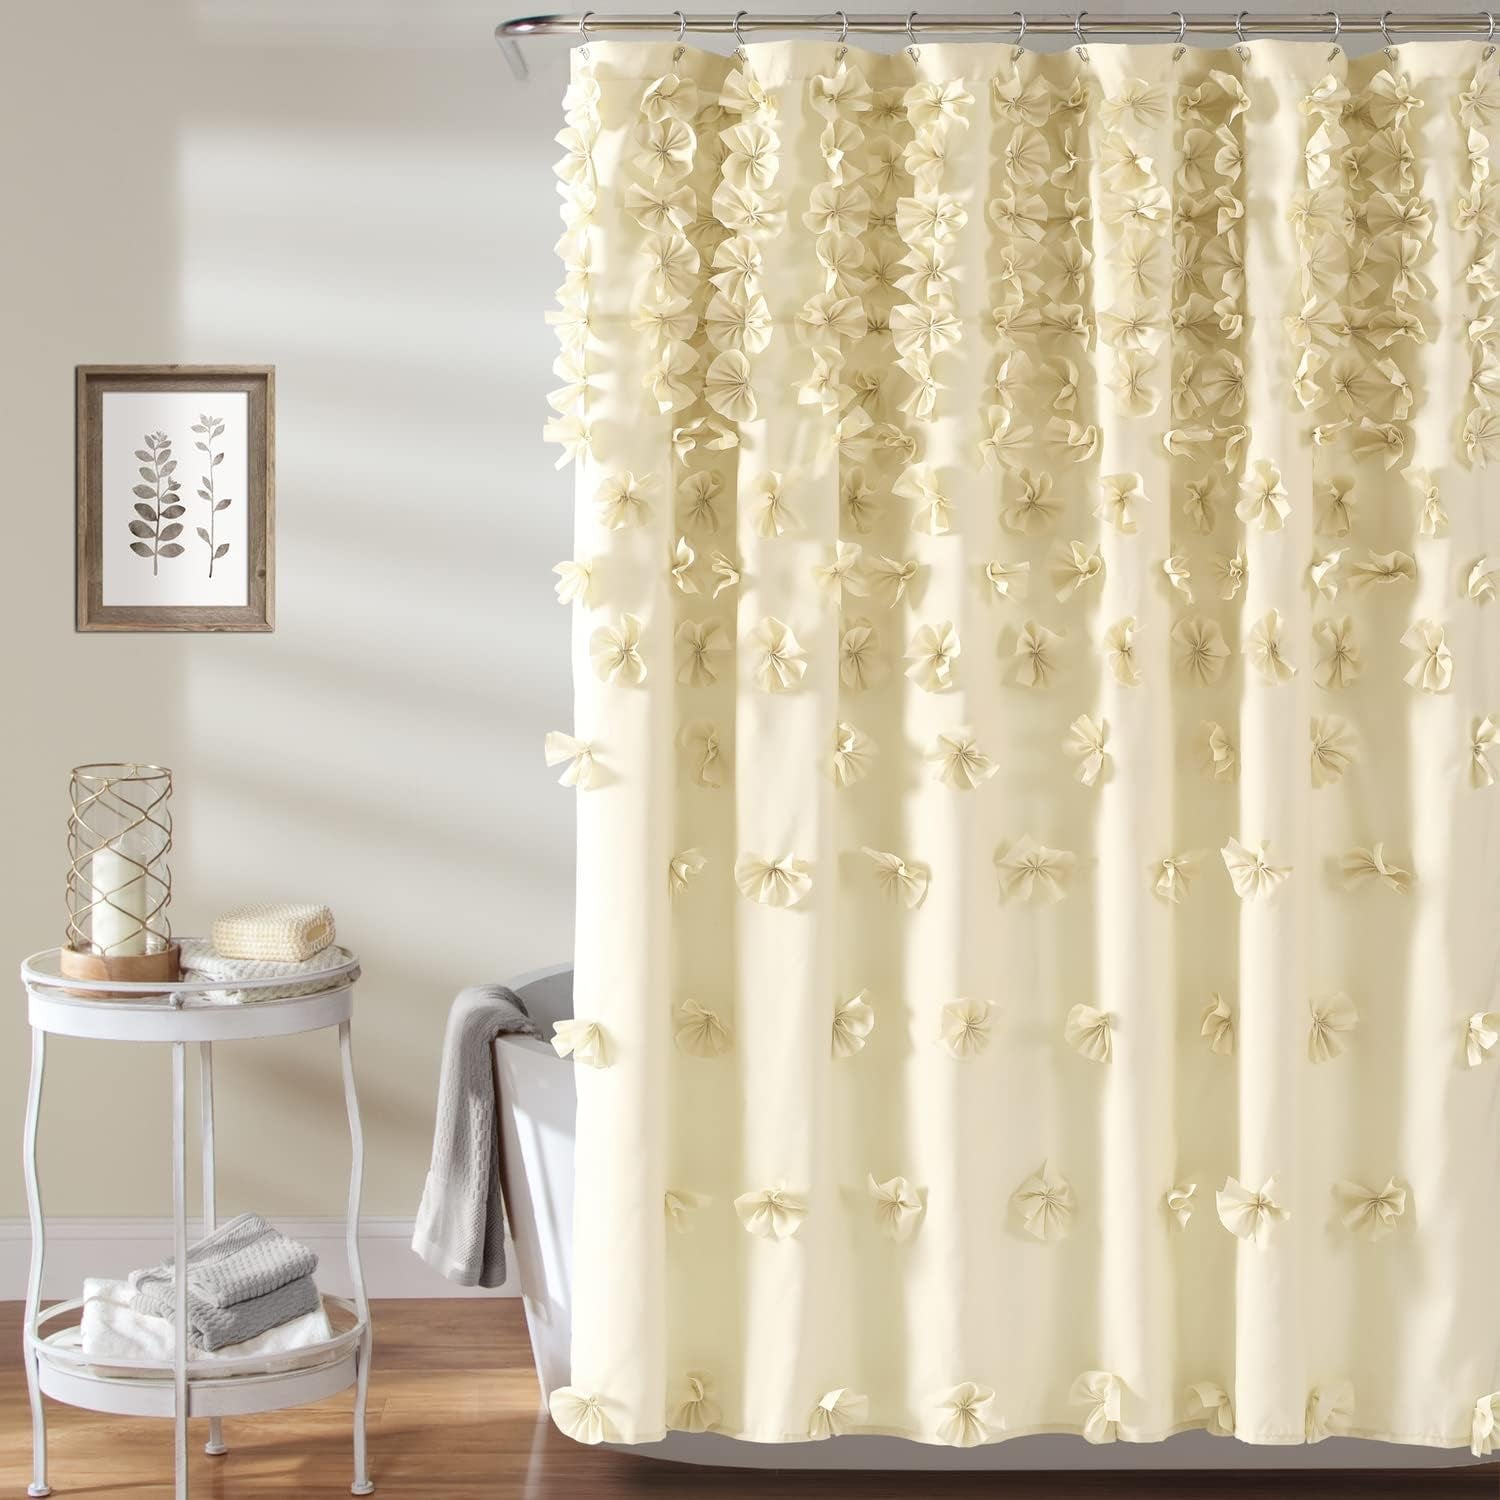 Lush Decor Riley Shower Curtain, 72" W X 72" L, Blush - Luxury Shower Curtain with Bows - Charming Texture - Beautiful & Elegant Girly Bathroom Accessory - Romantic, Vintage Glam Bathroom Decor